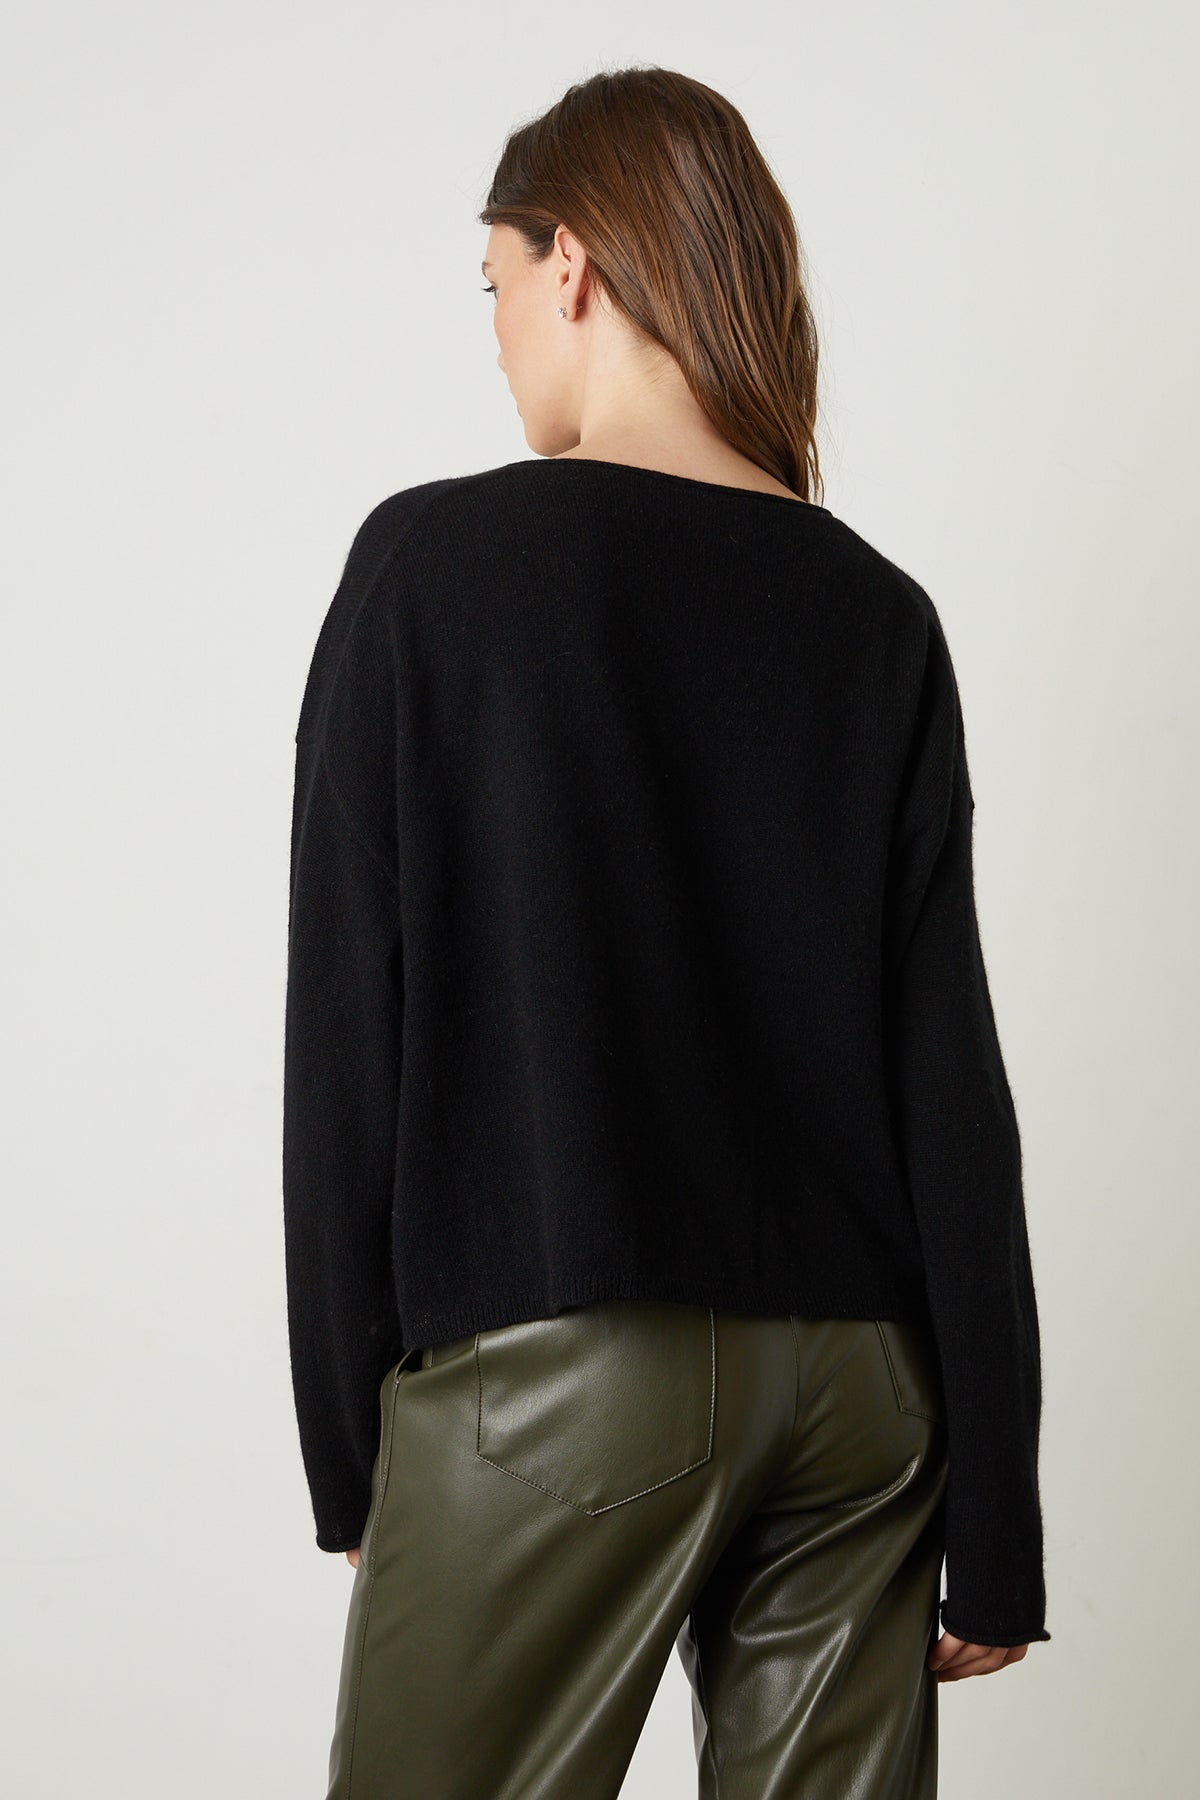   Amika Cashmere V-Neck Sweater in black back 